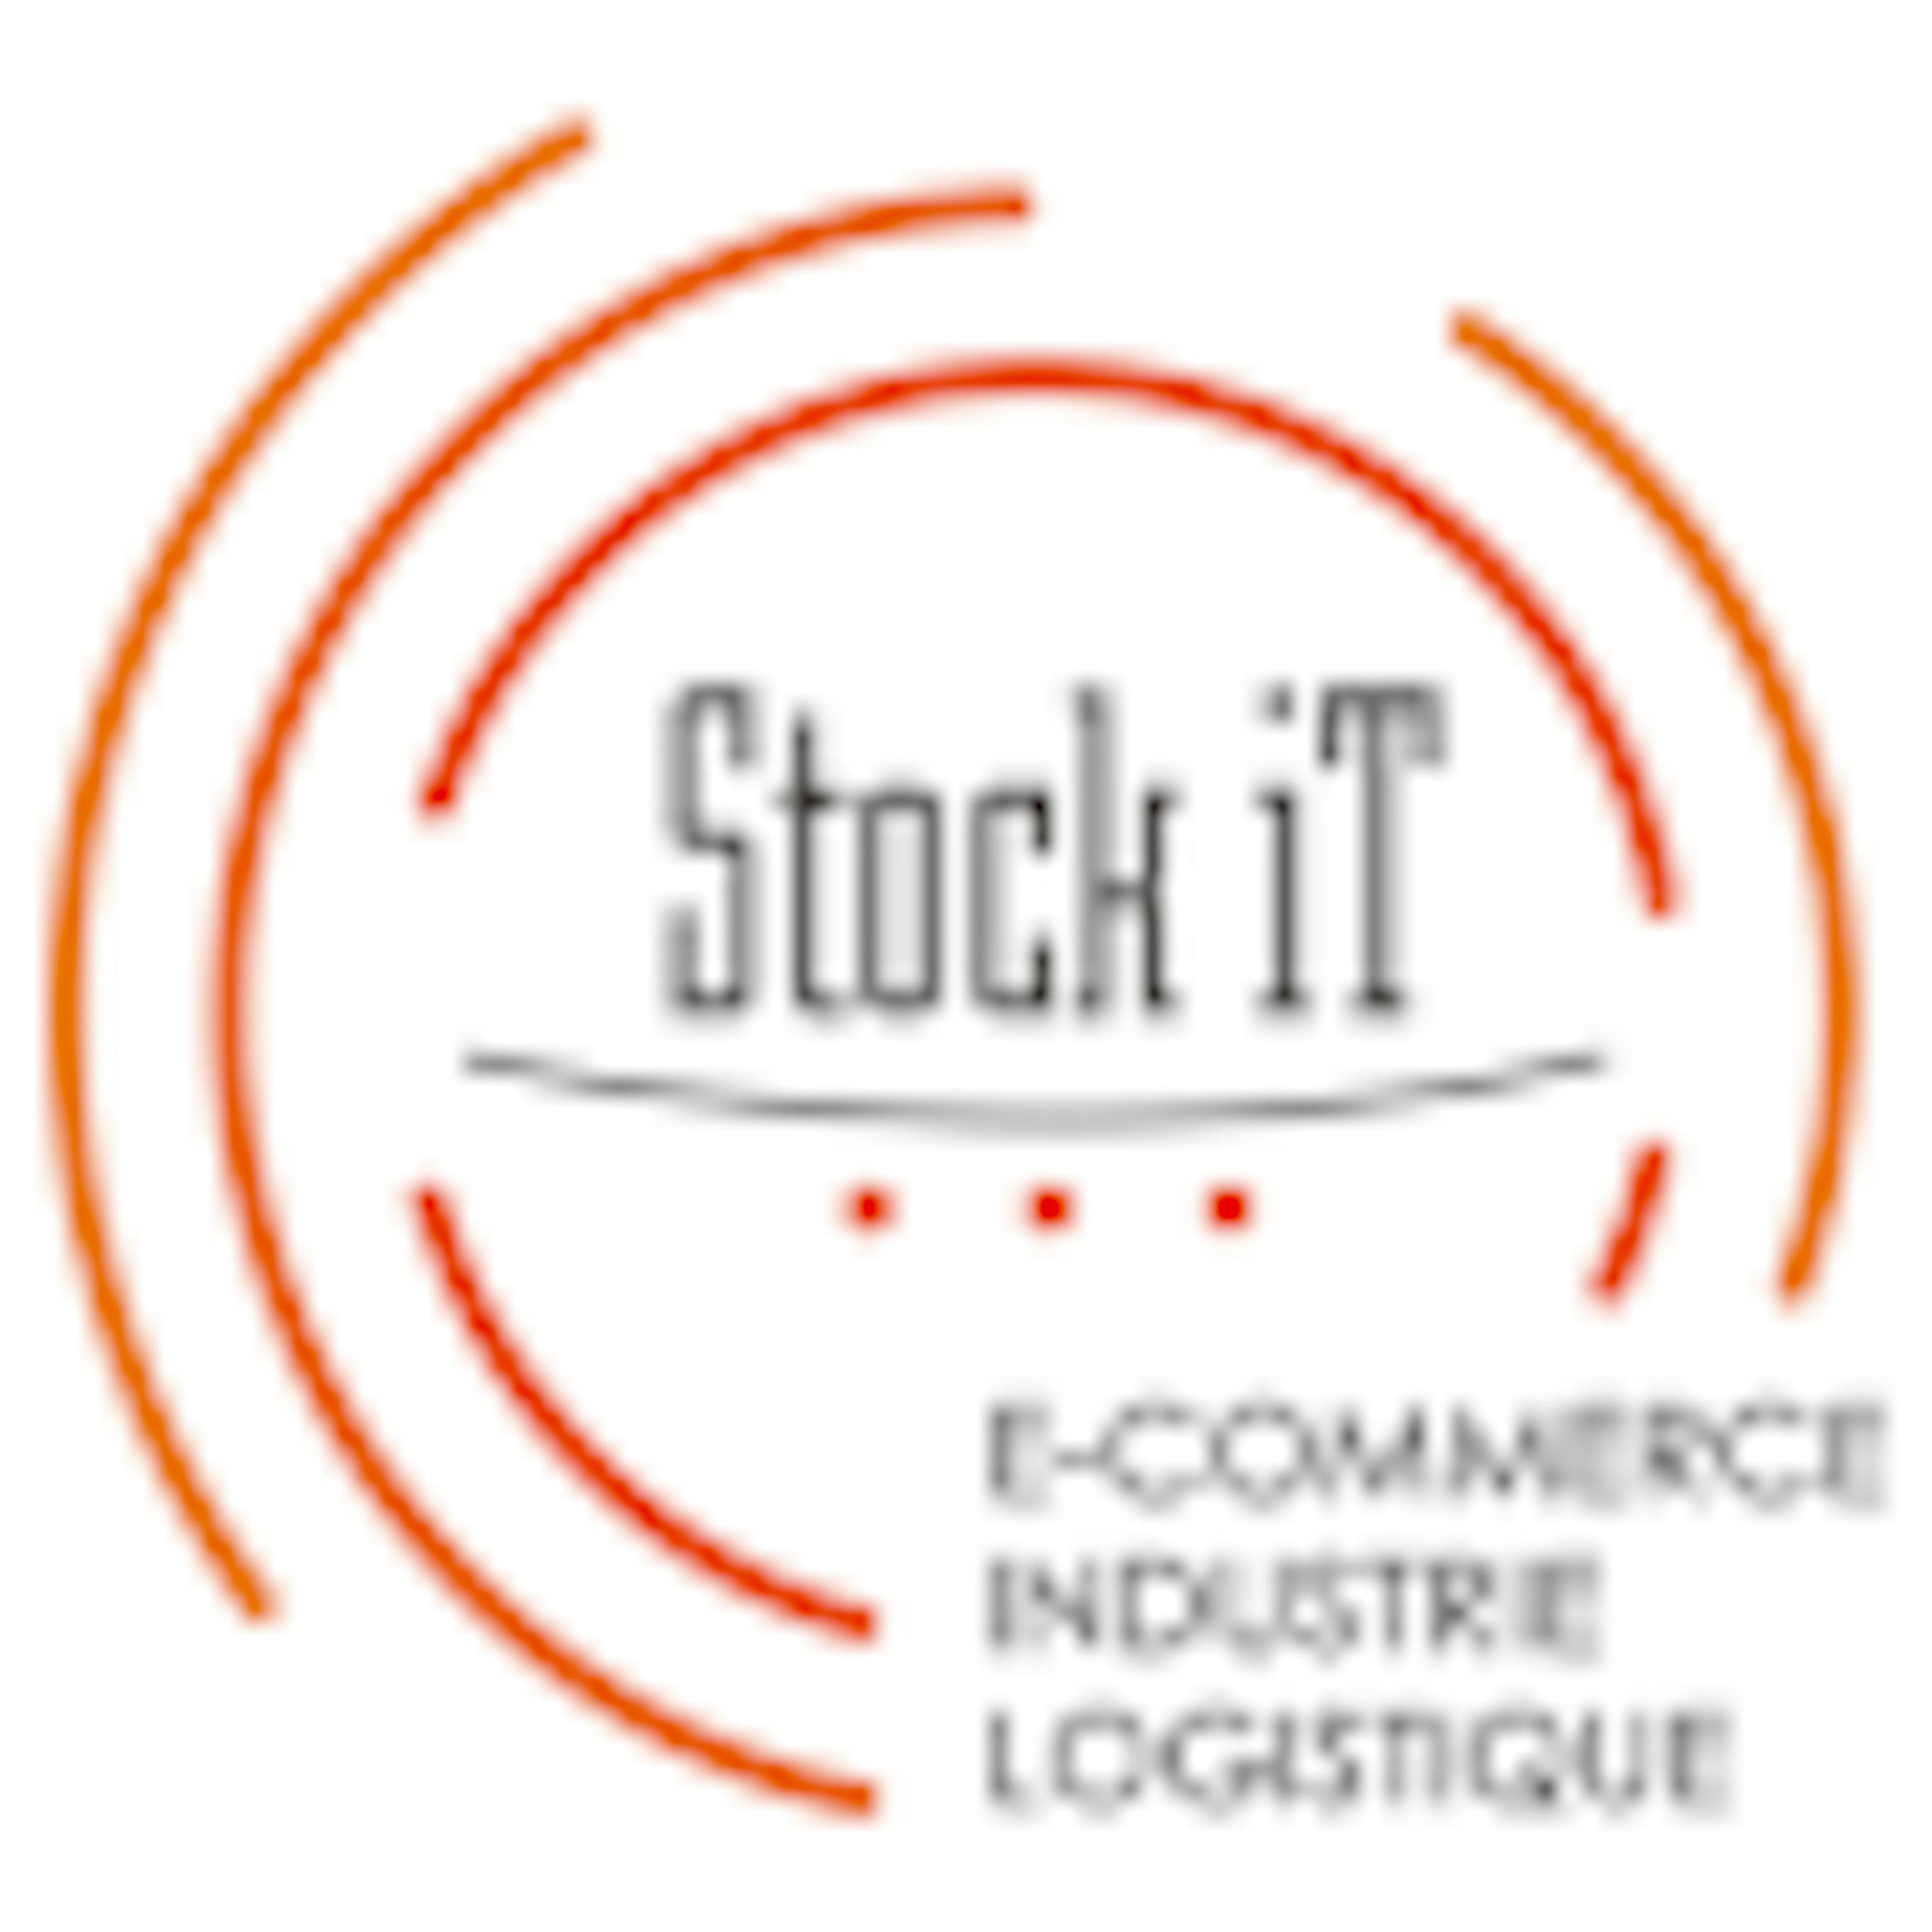 stock-it logo